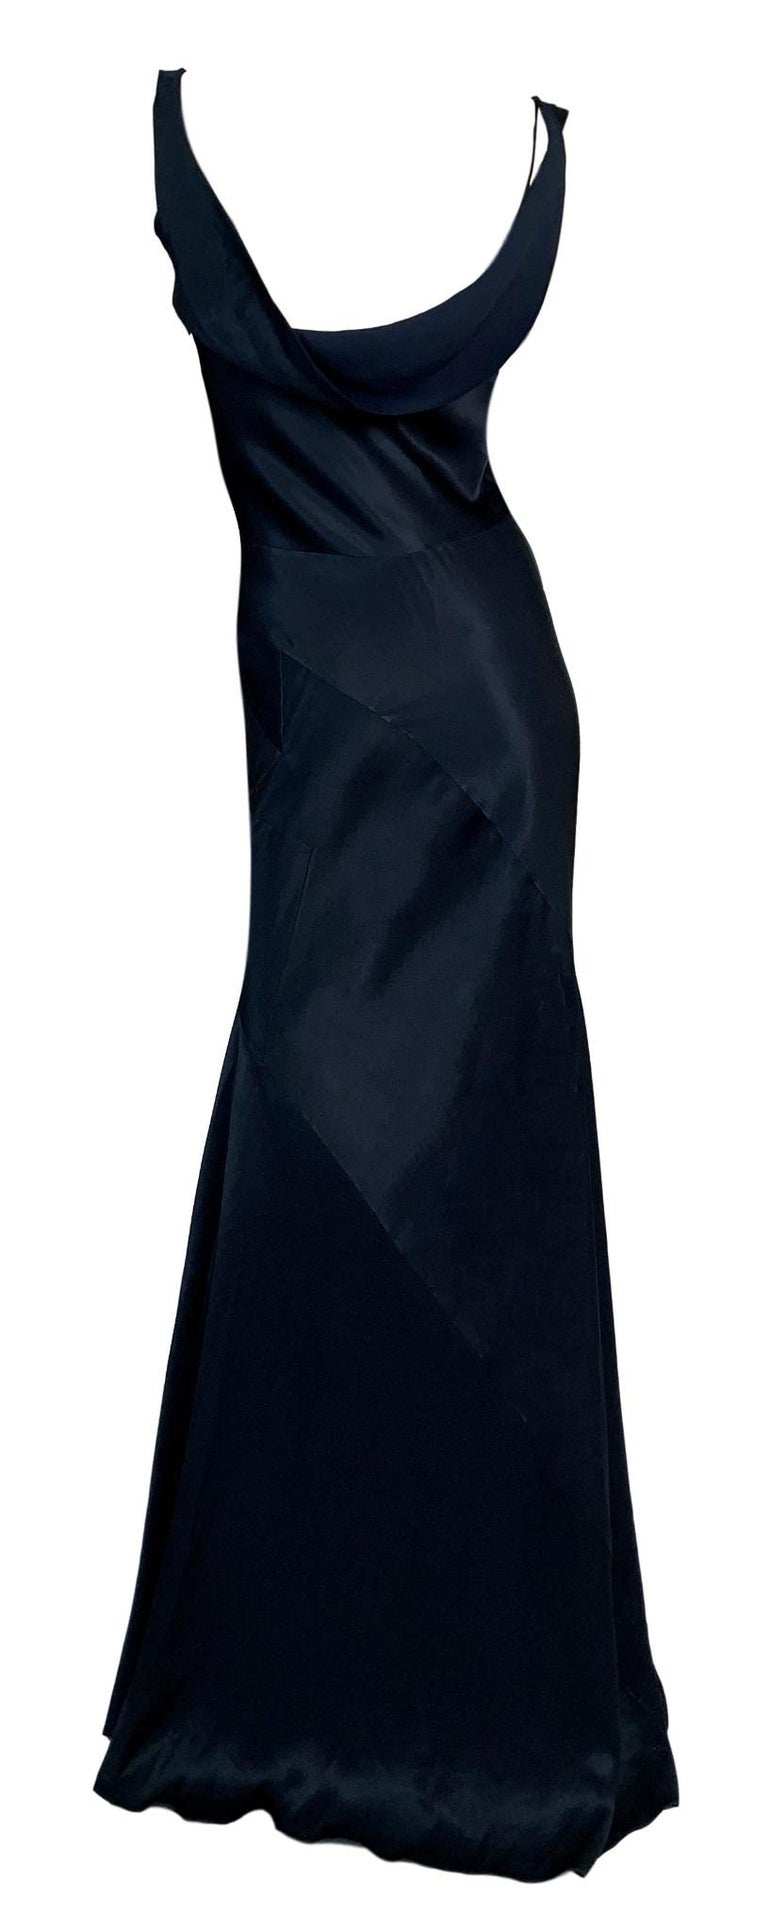 S/S 1995 John Galliano Navy Blue Satin Gown Dress at 1stDibs